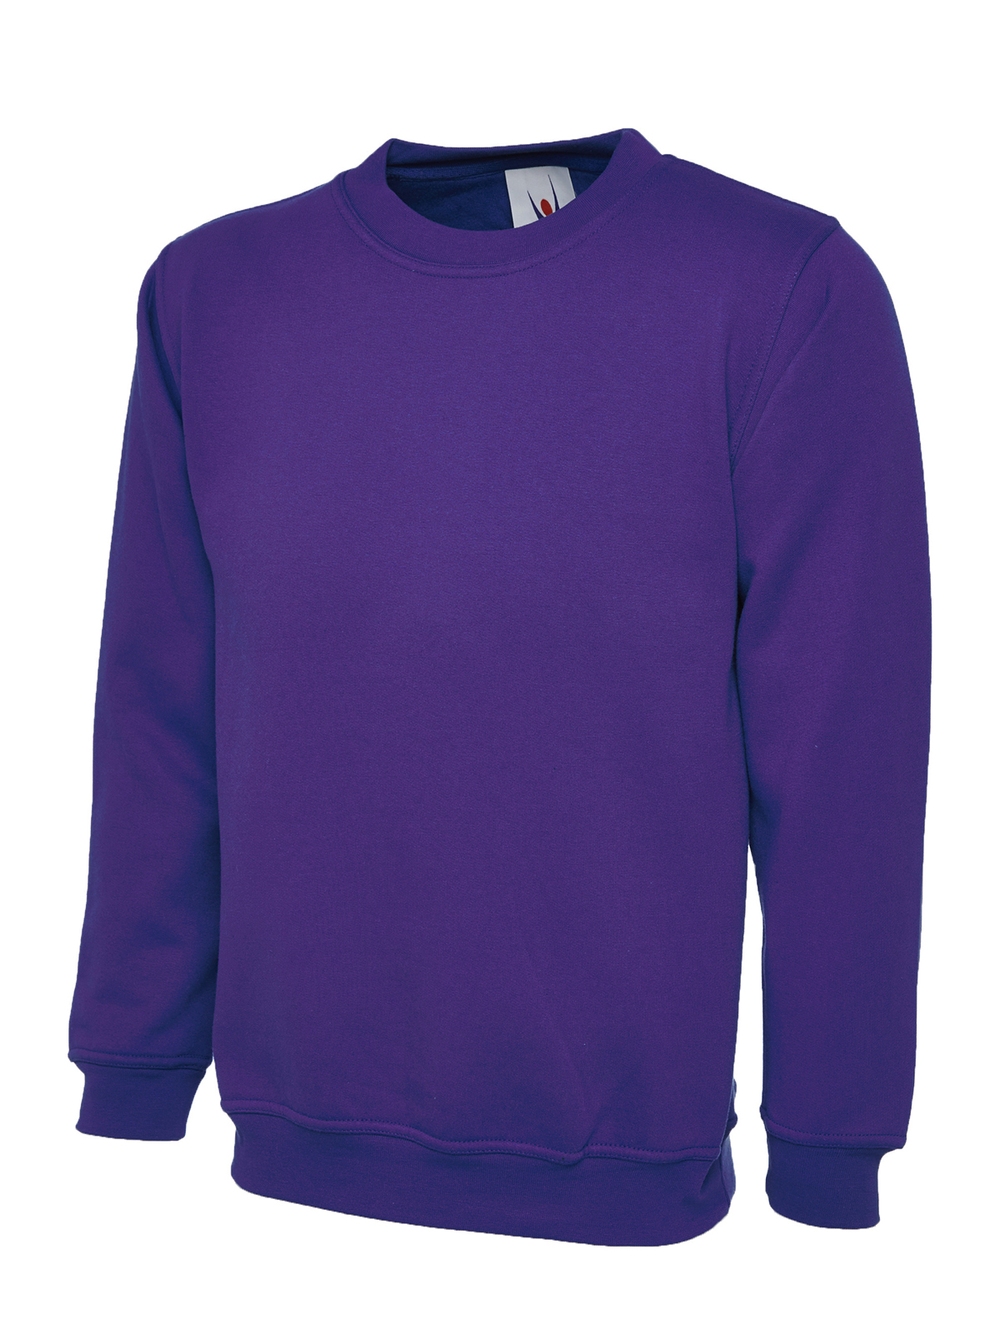 Purplesweatshirt